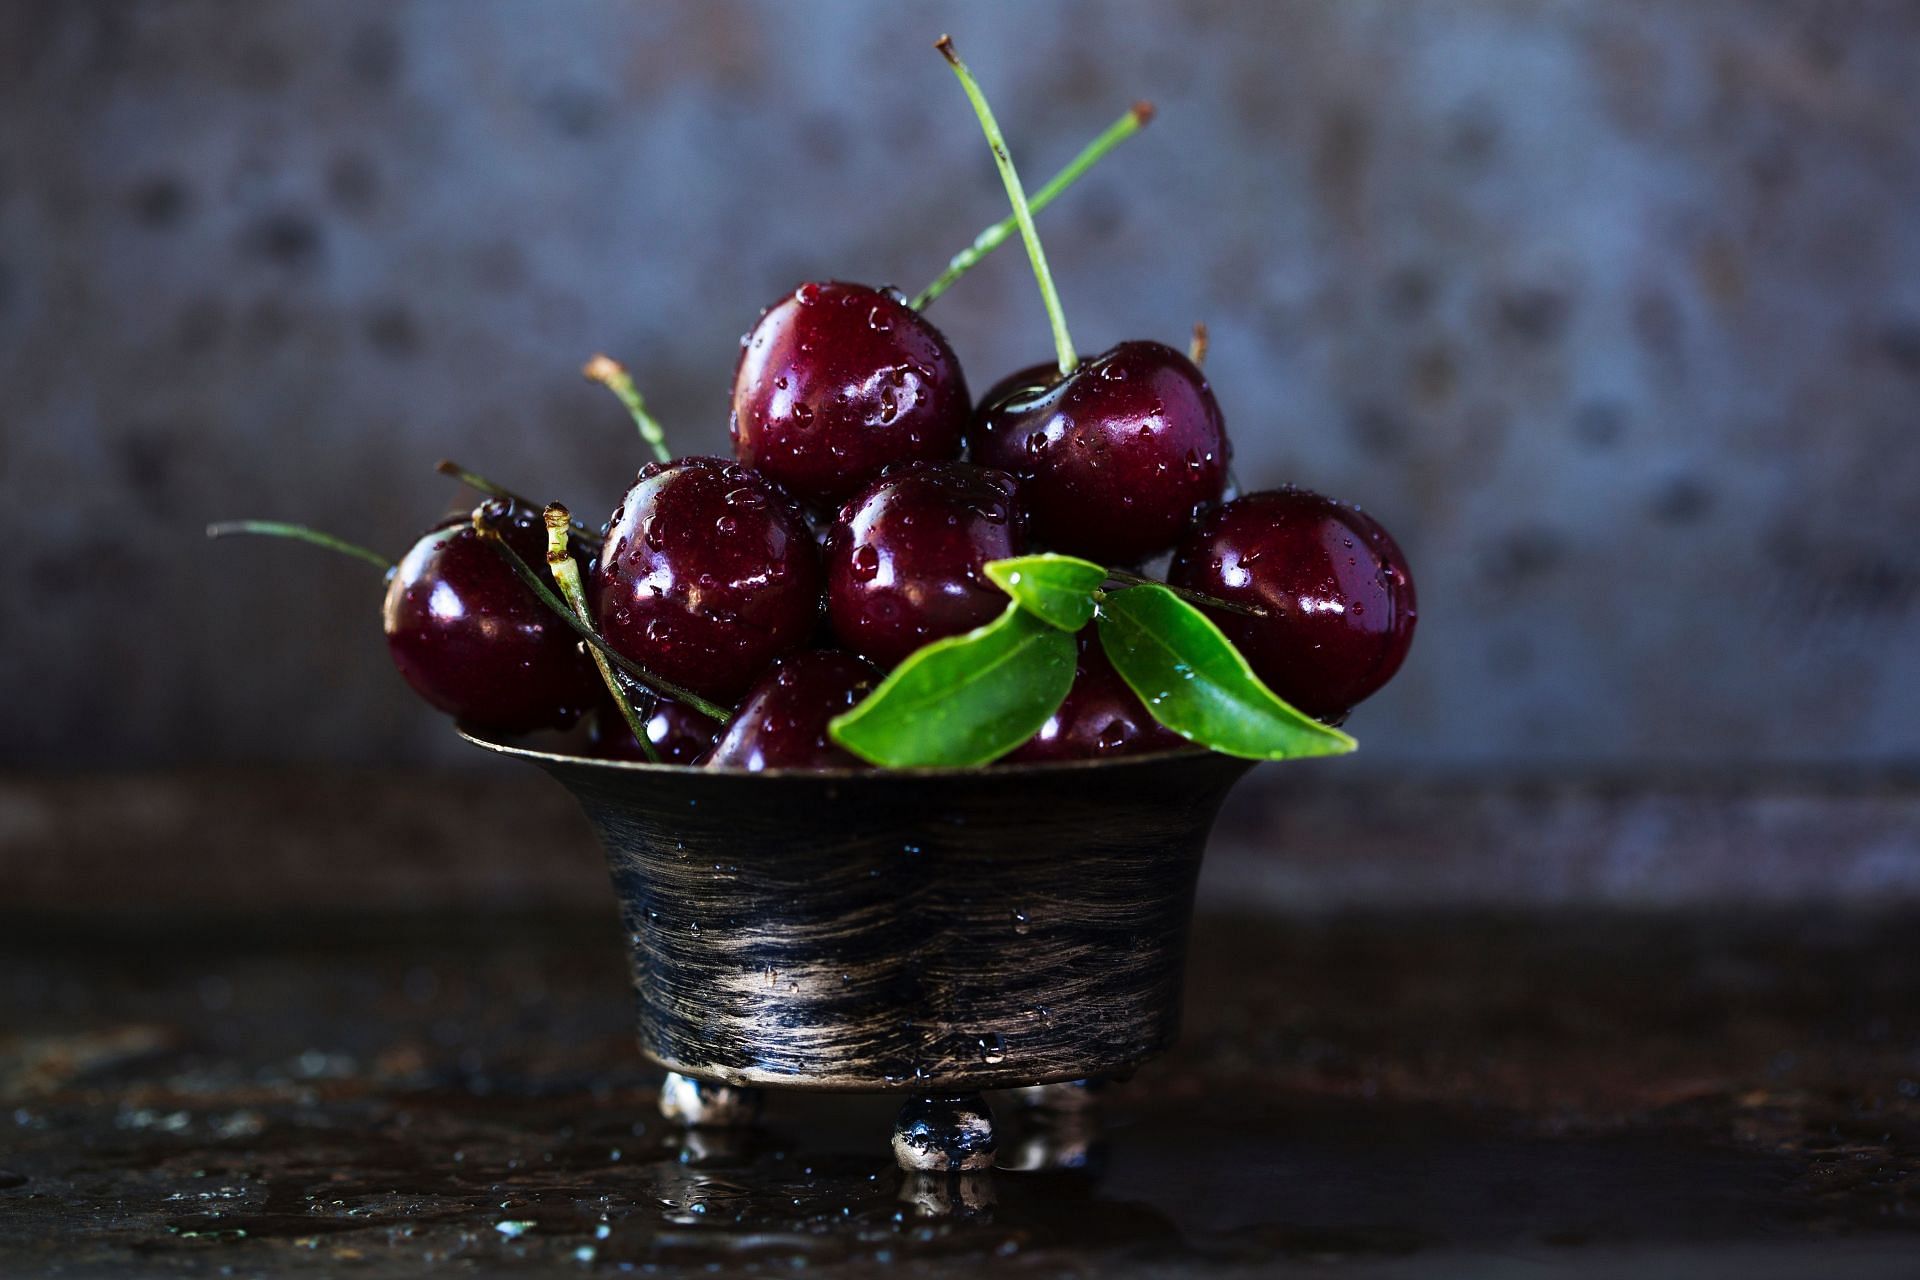 Black cherries have health benefits. (Image via Pexels/Wendy Van Zyl)